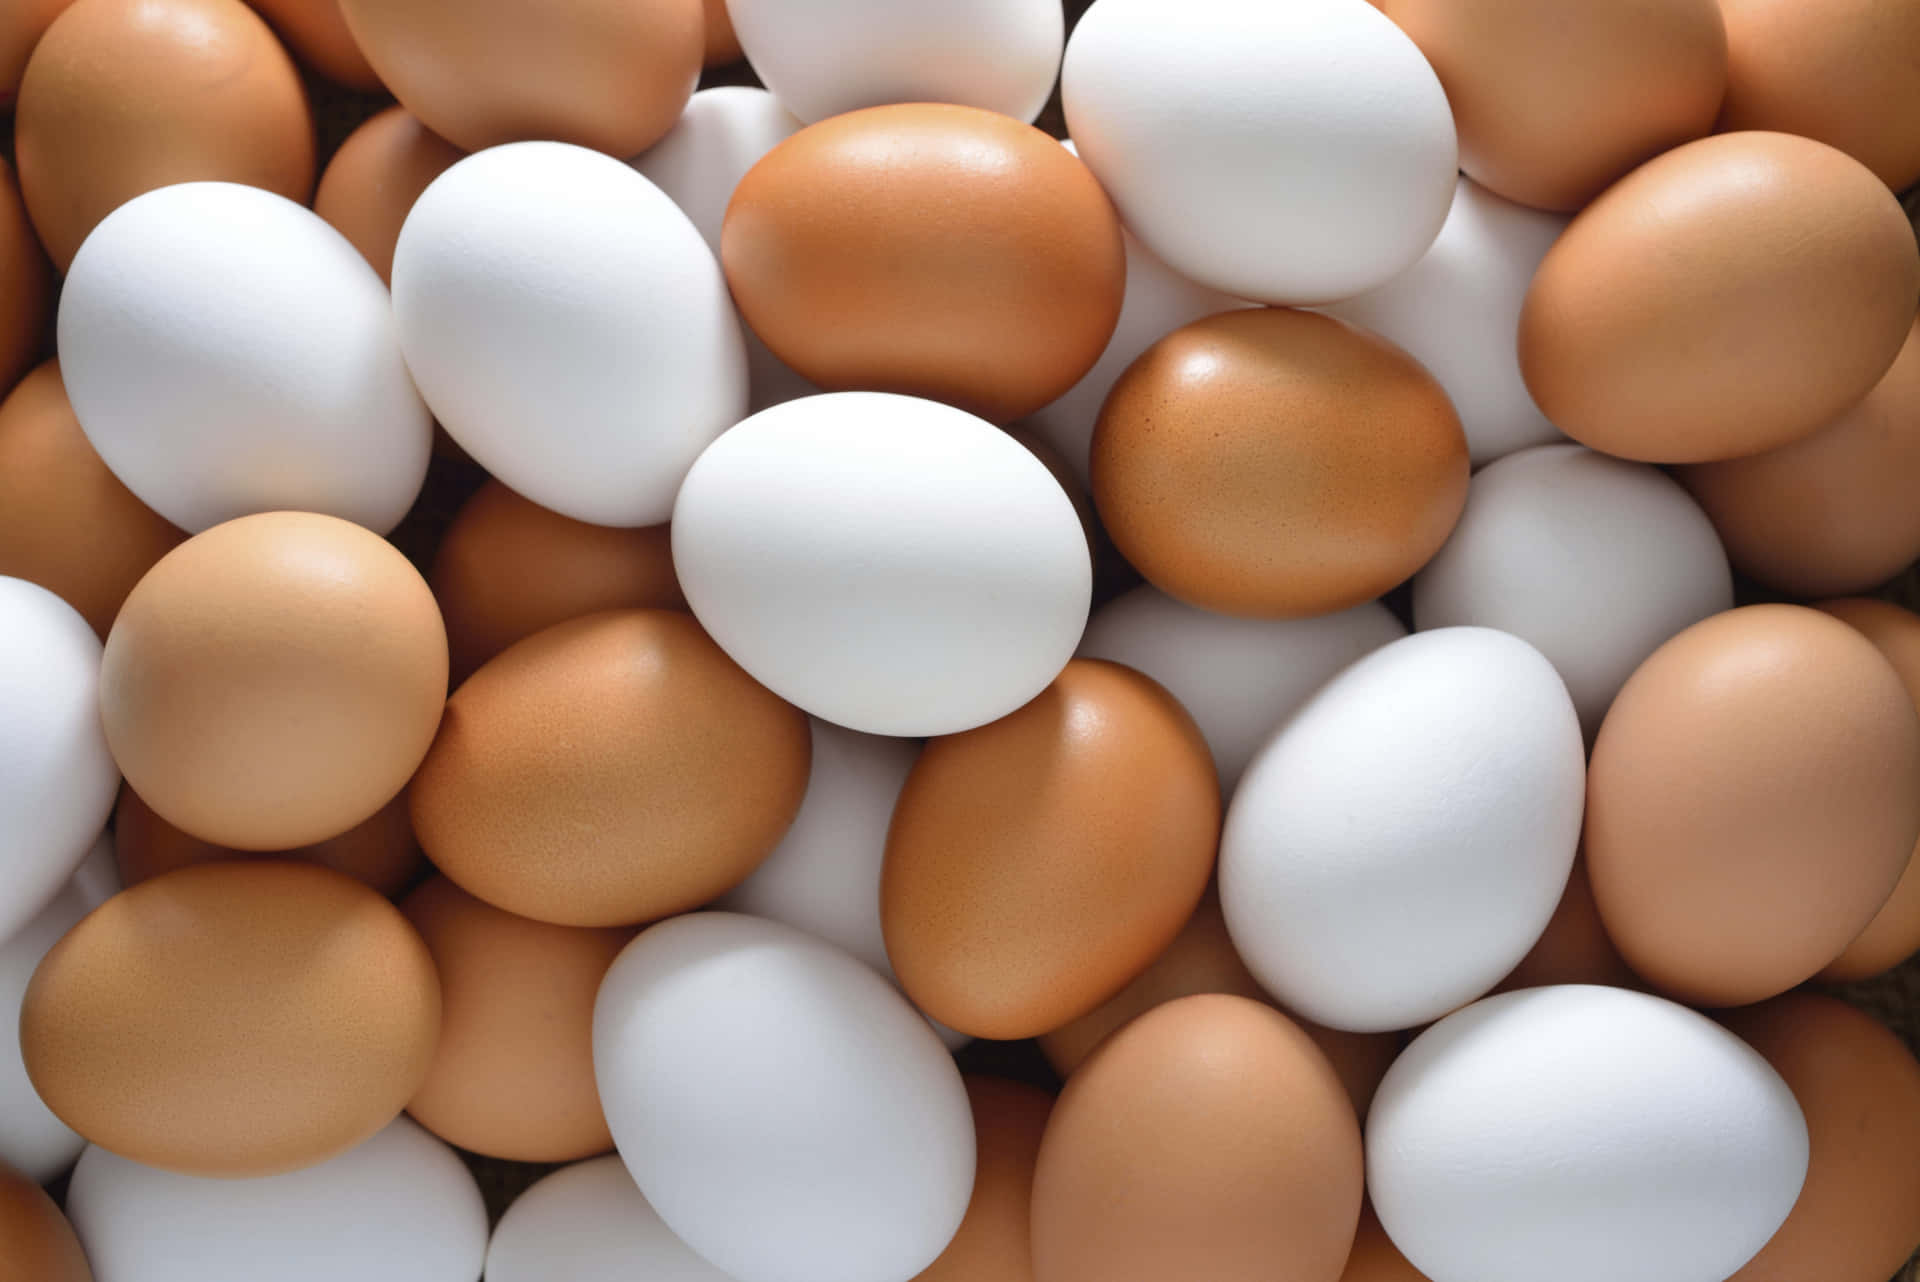 Fresh Eggs abundant in Nature